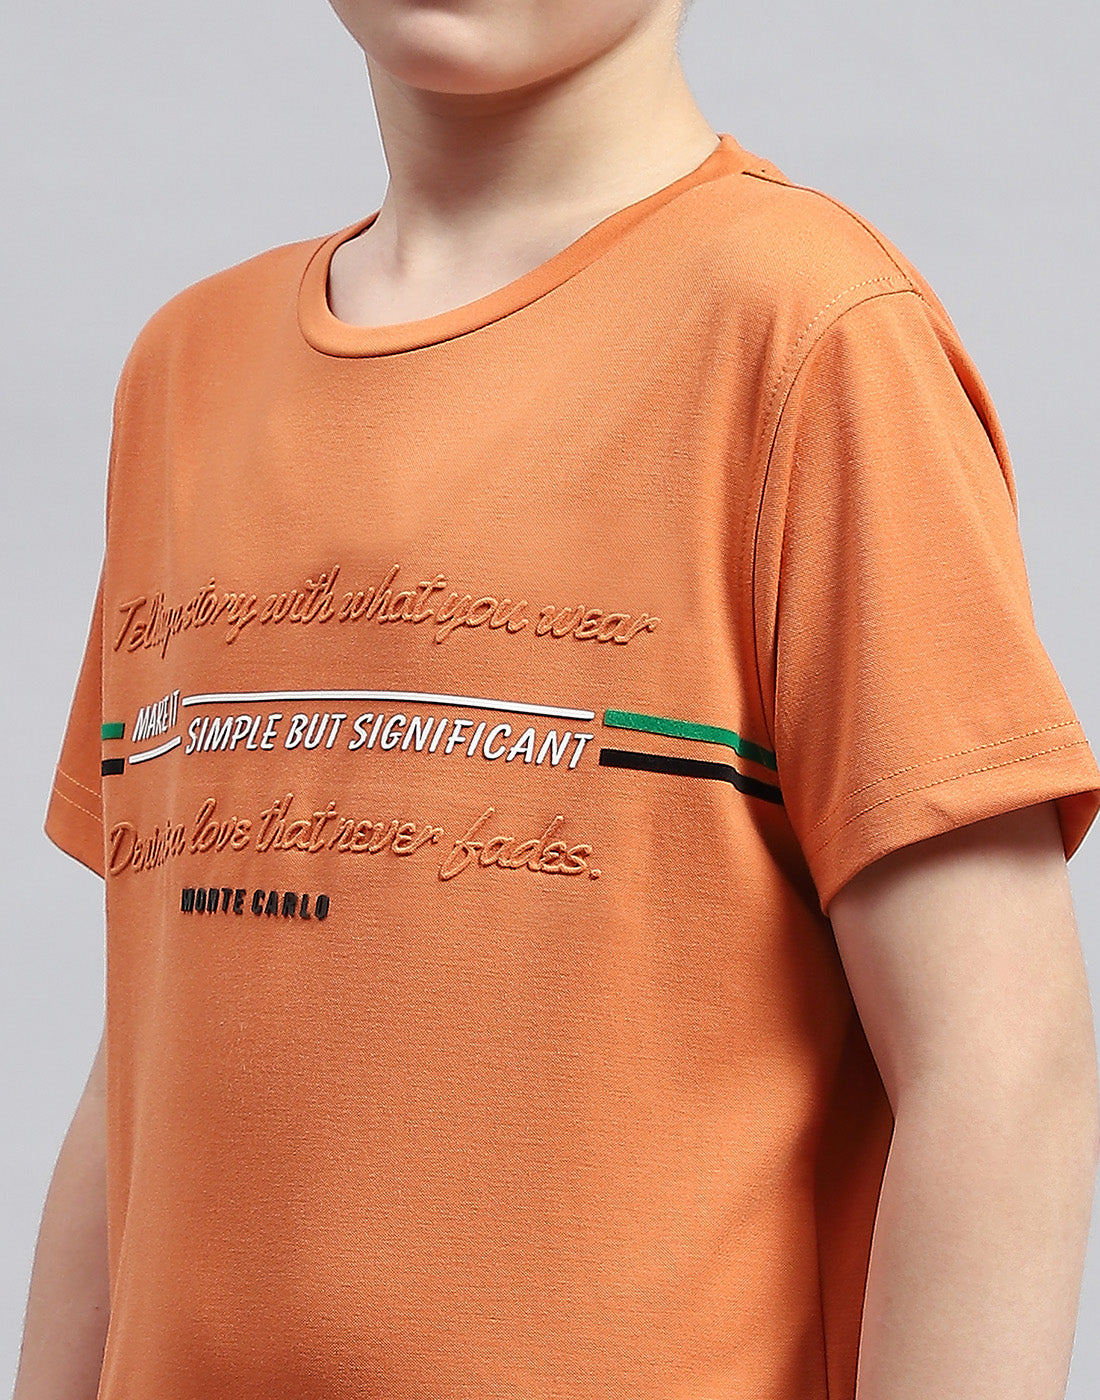 Boys Rust Printed Round Neck Half Sleeve T-Shirt